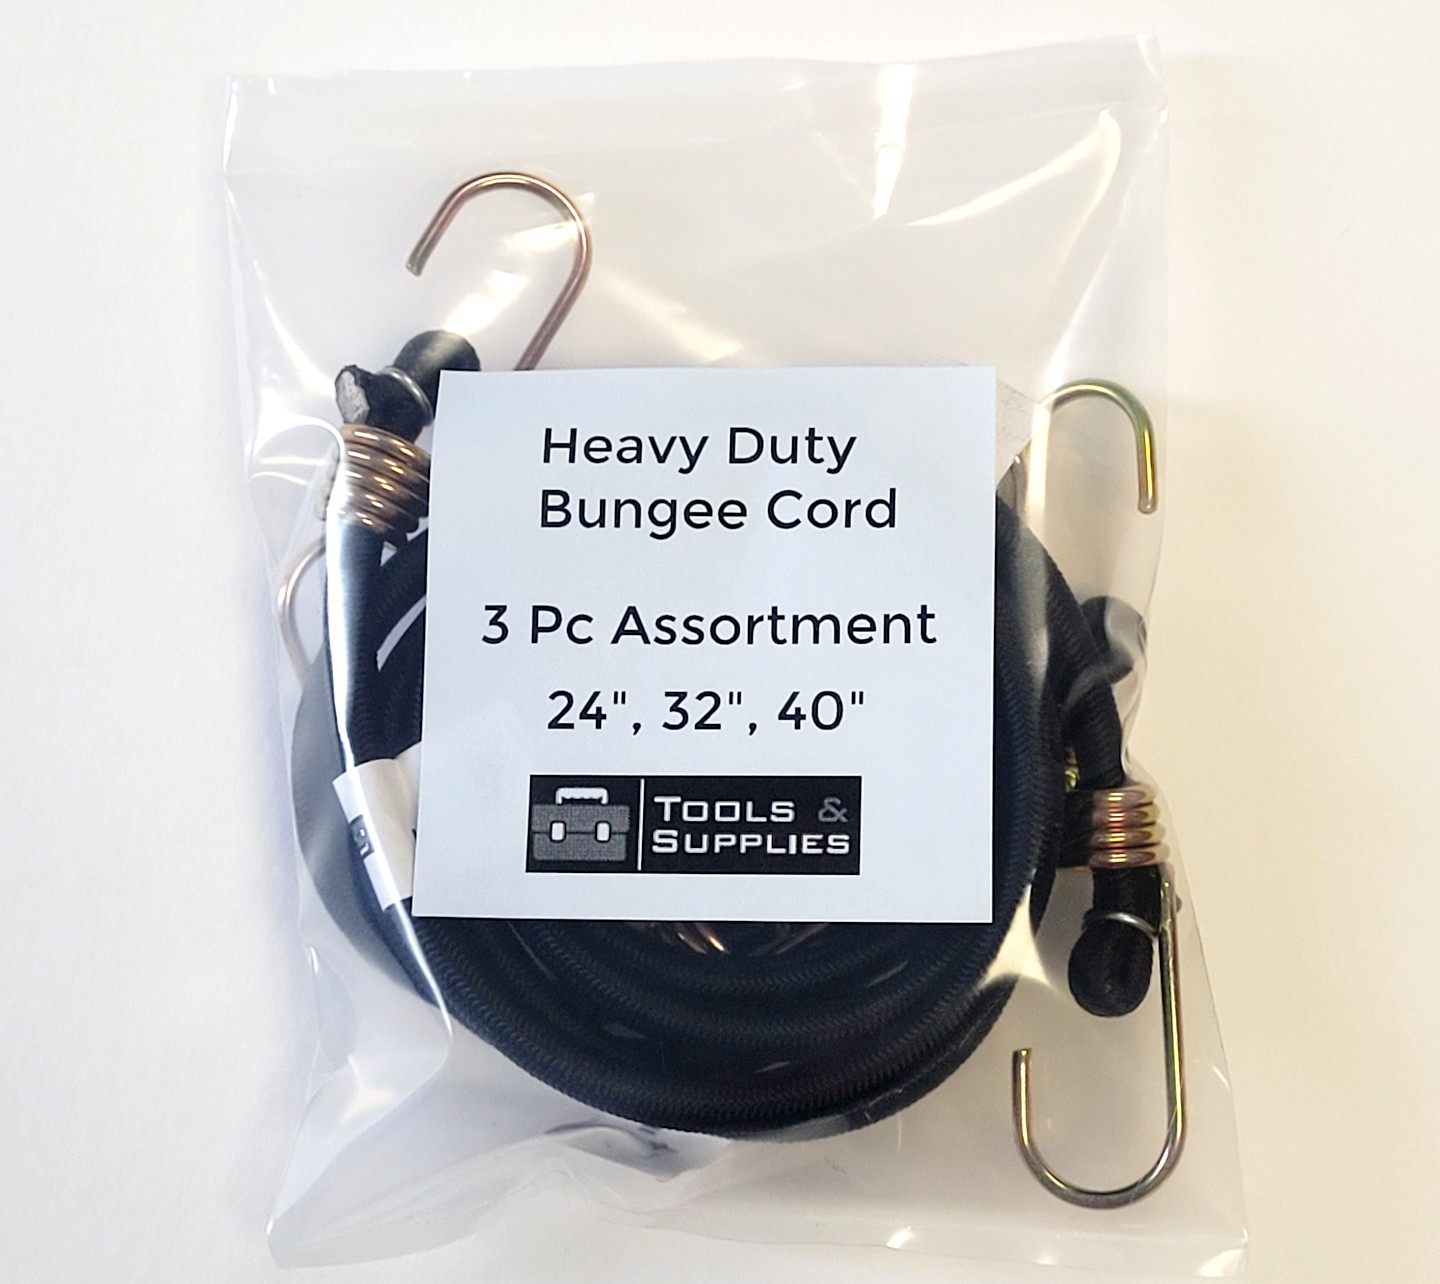 Toolsandsupplies.com heavy duty bungee cord 3 piece pack